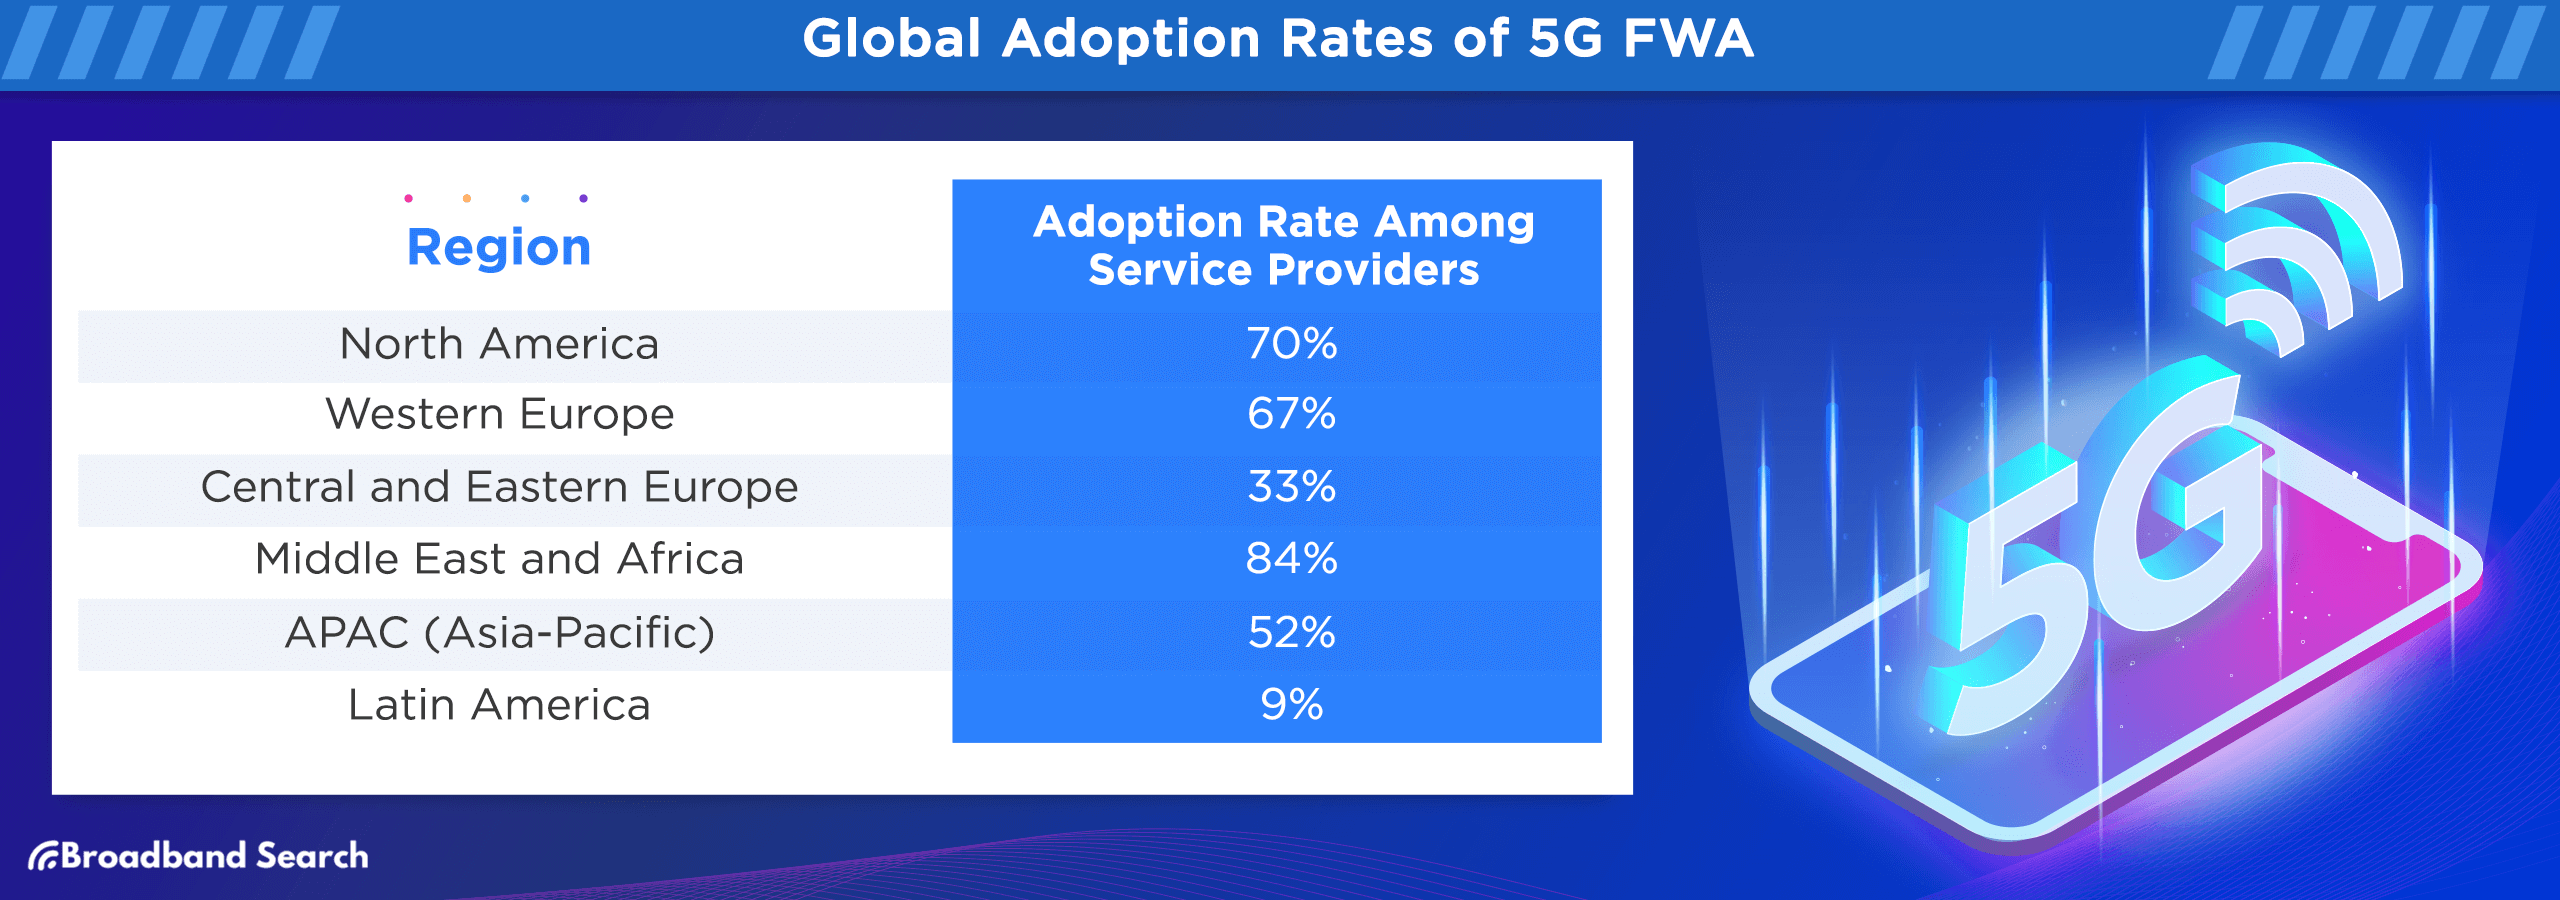 Global adoption rates of 5g fwa